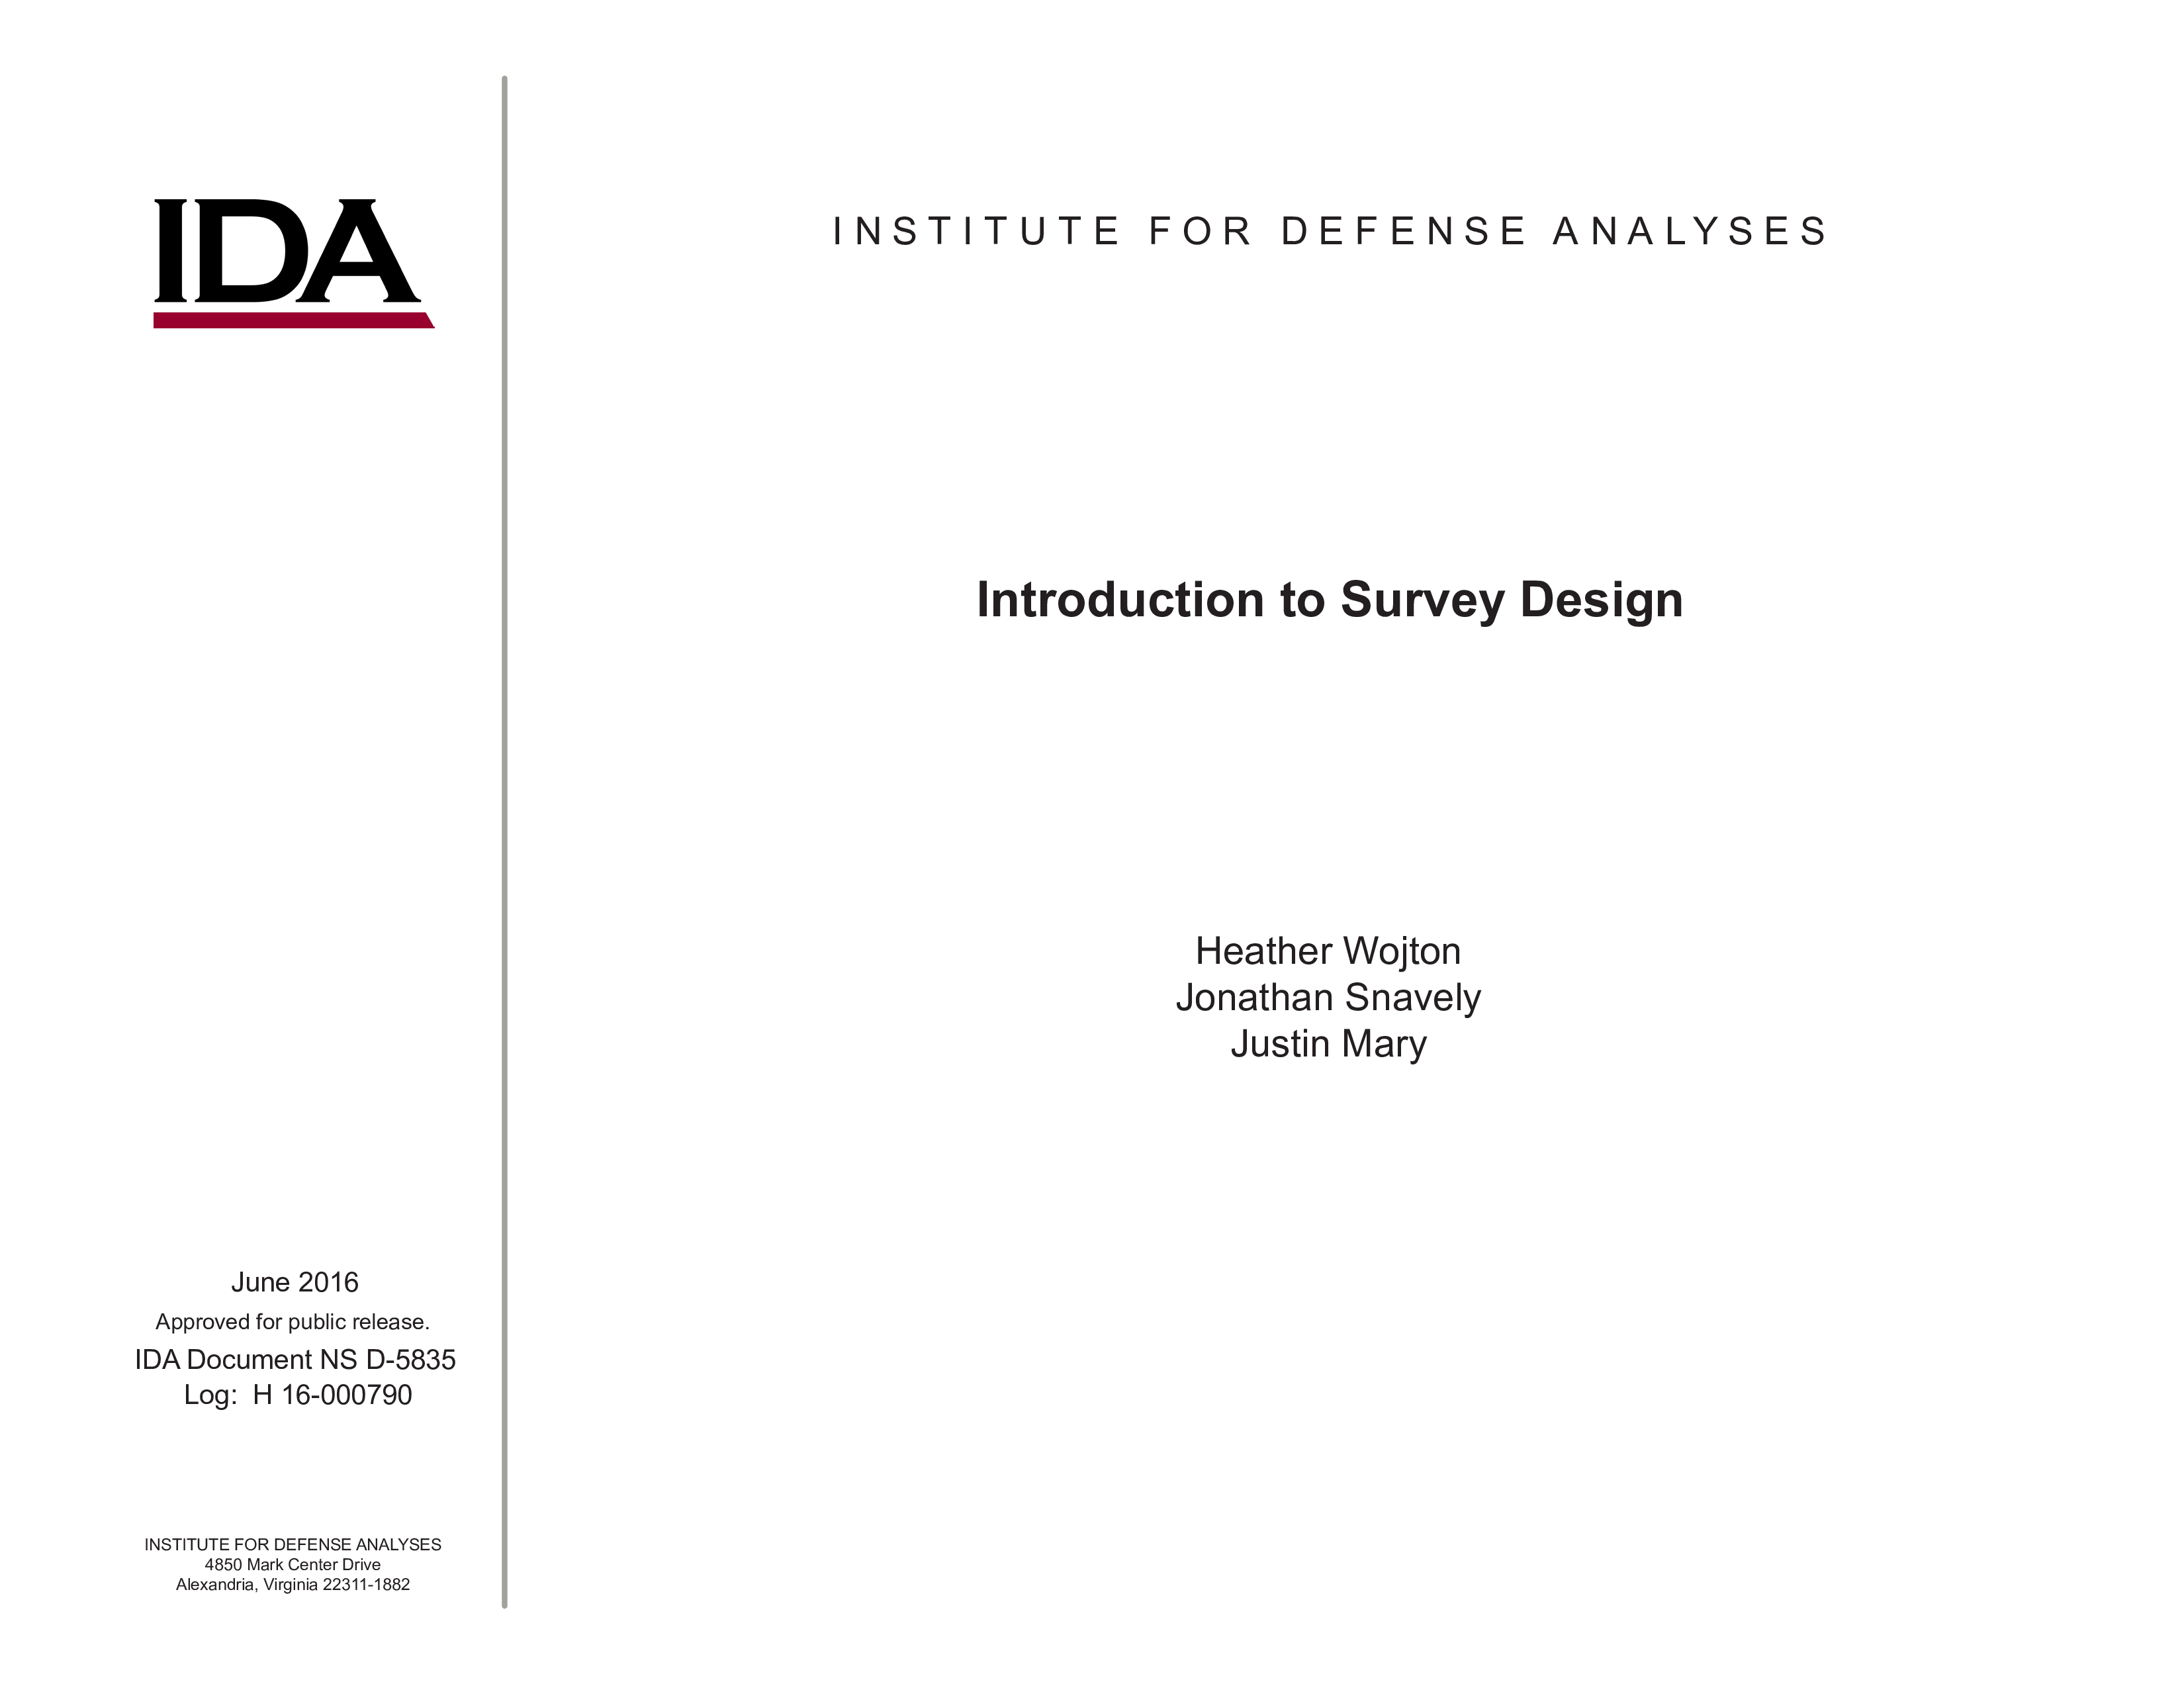 Introduction to Survey Design